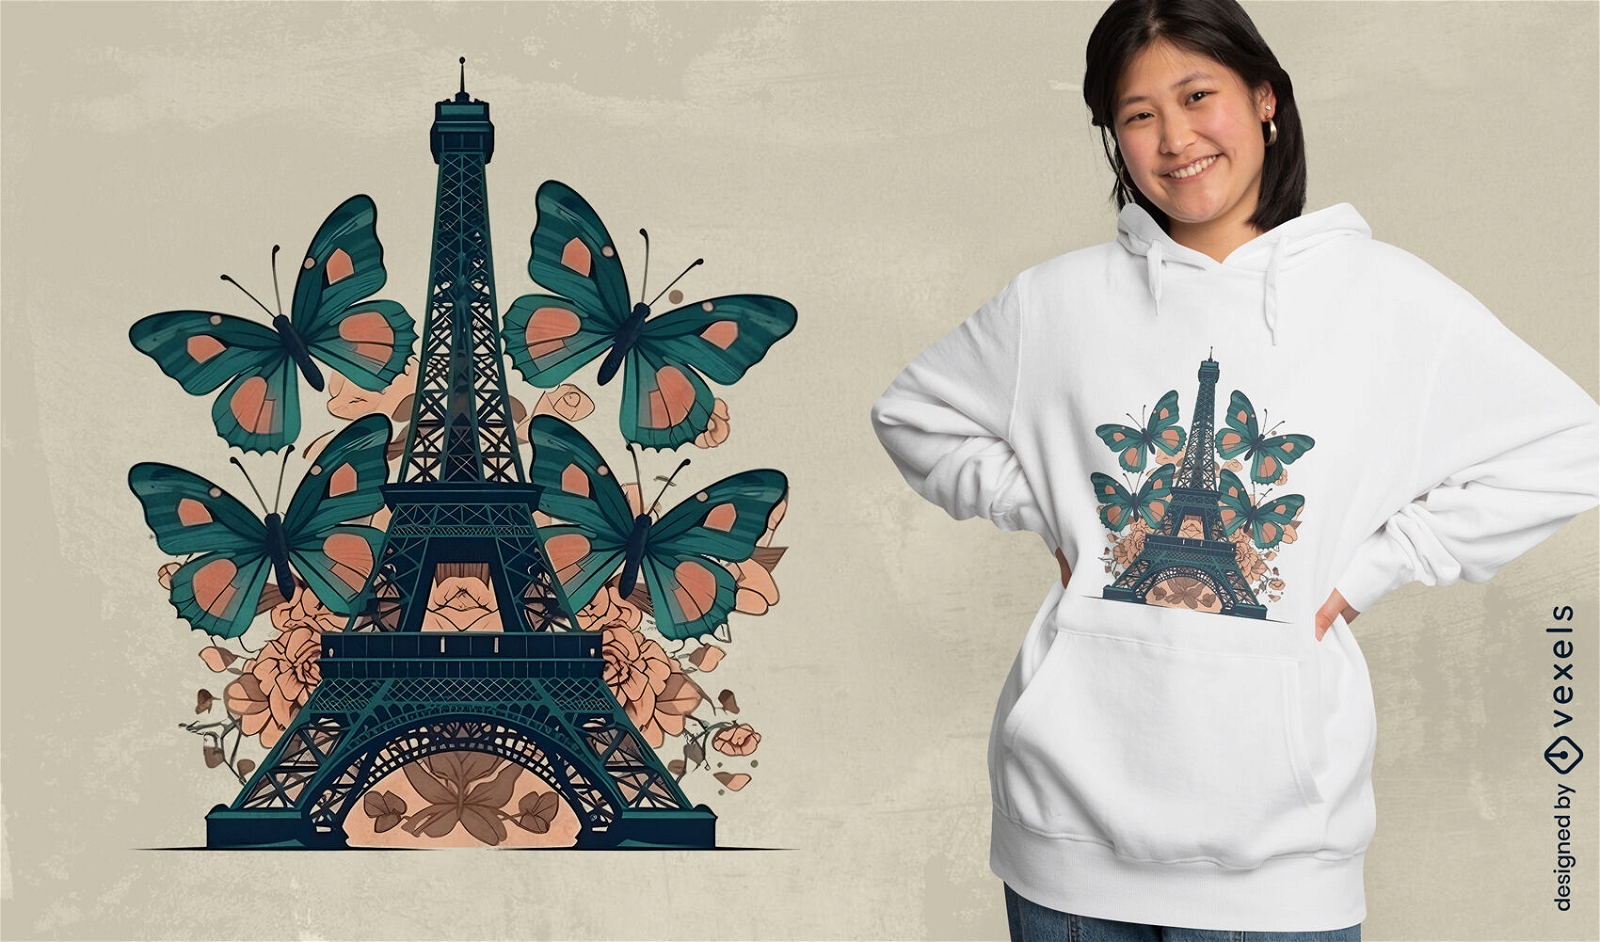 Dise?o de camiseta Torre Eiffel con mariposas.